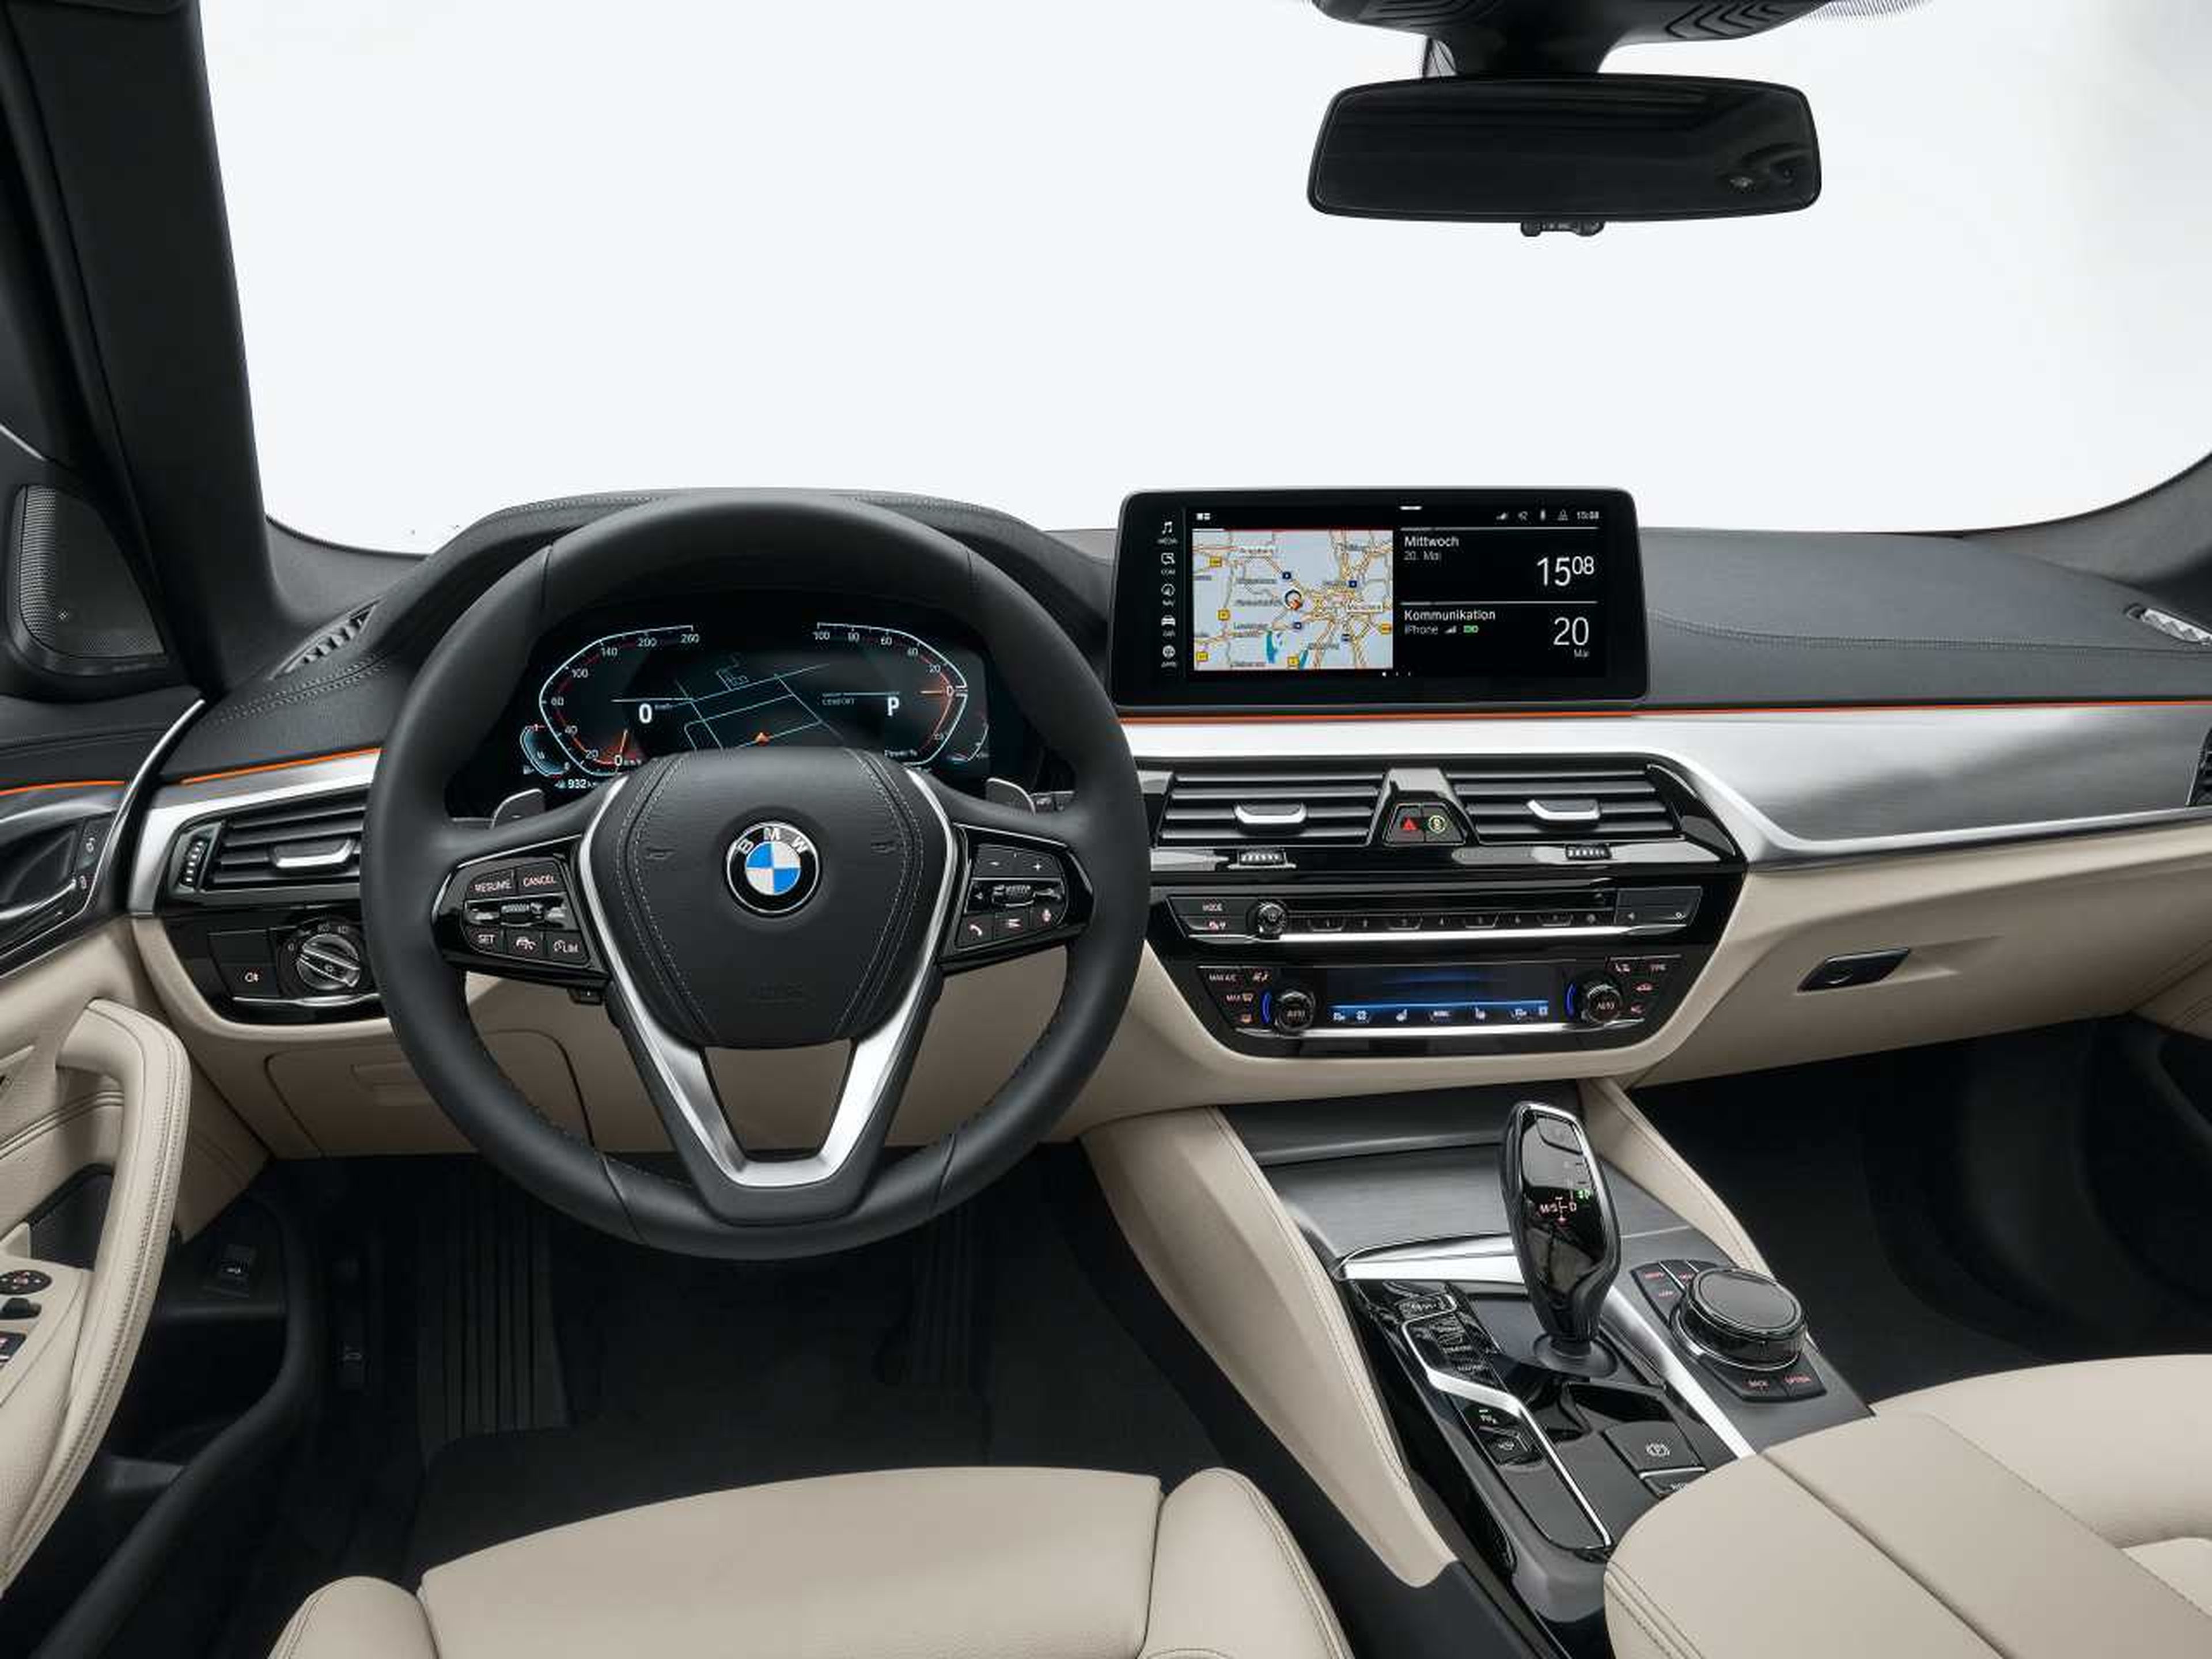 BMW Serie 5 touring interior